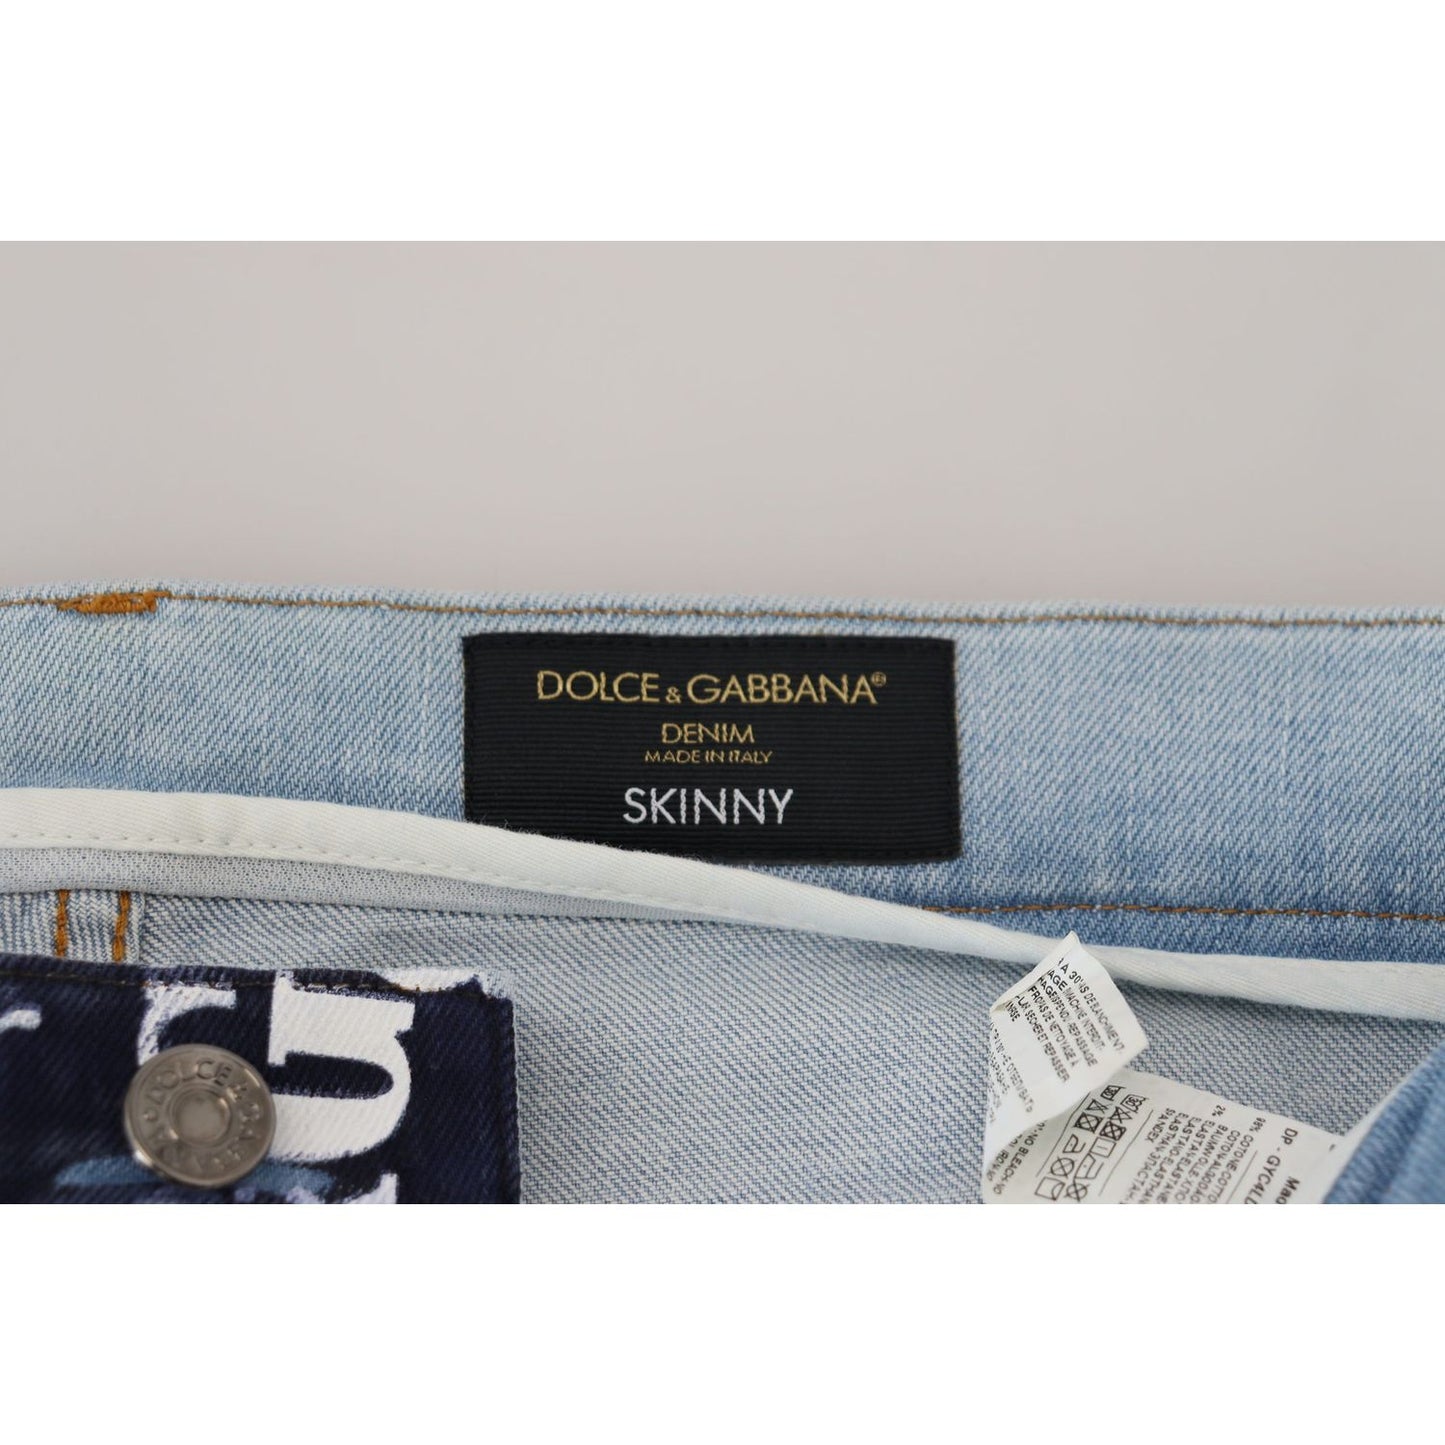 Dolce & Gabbana Elegant Crown Print Denim Pants blue-cotton-dg-crown-skinny-denim-jeans